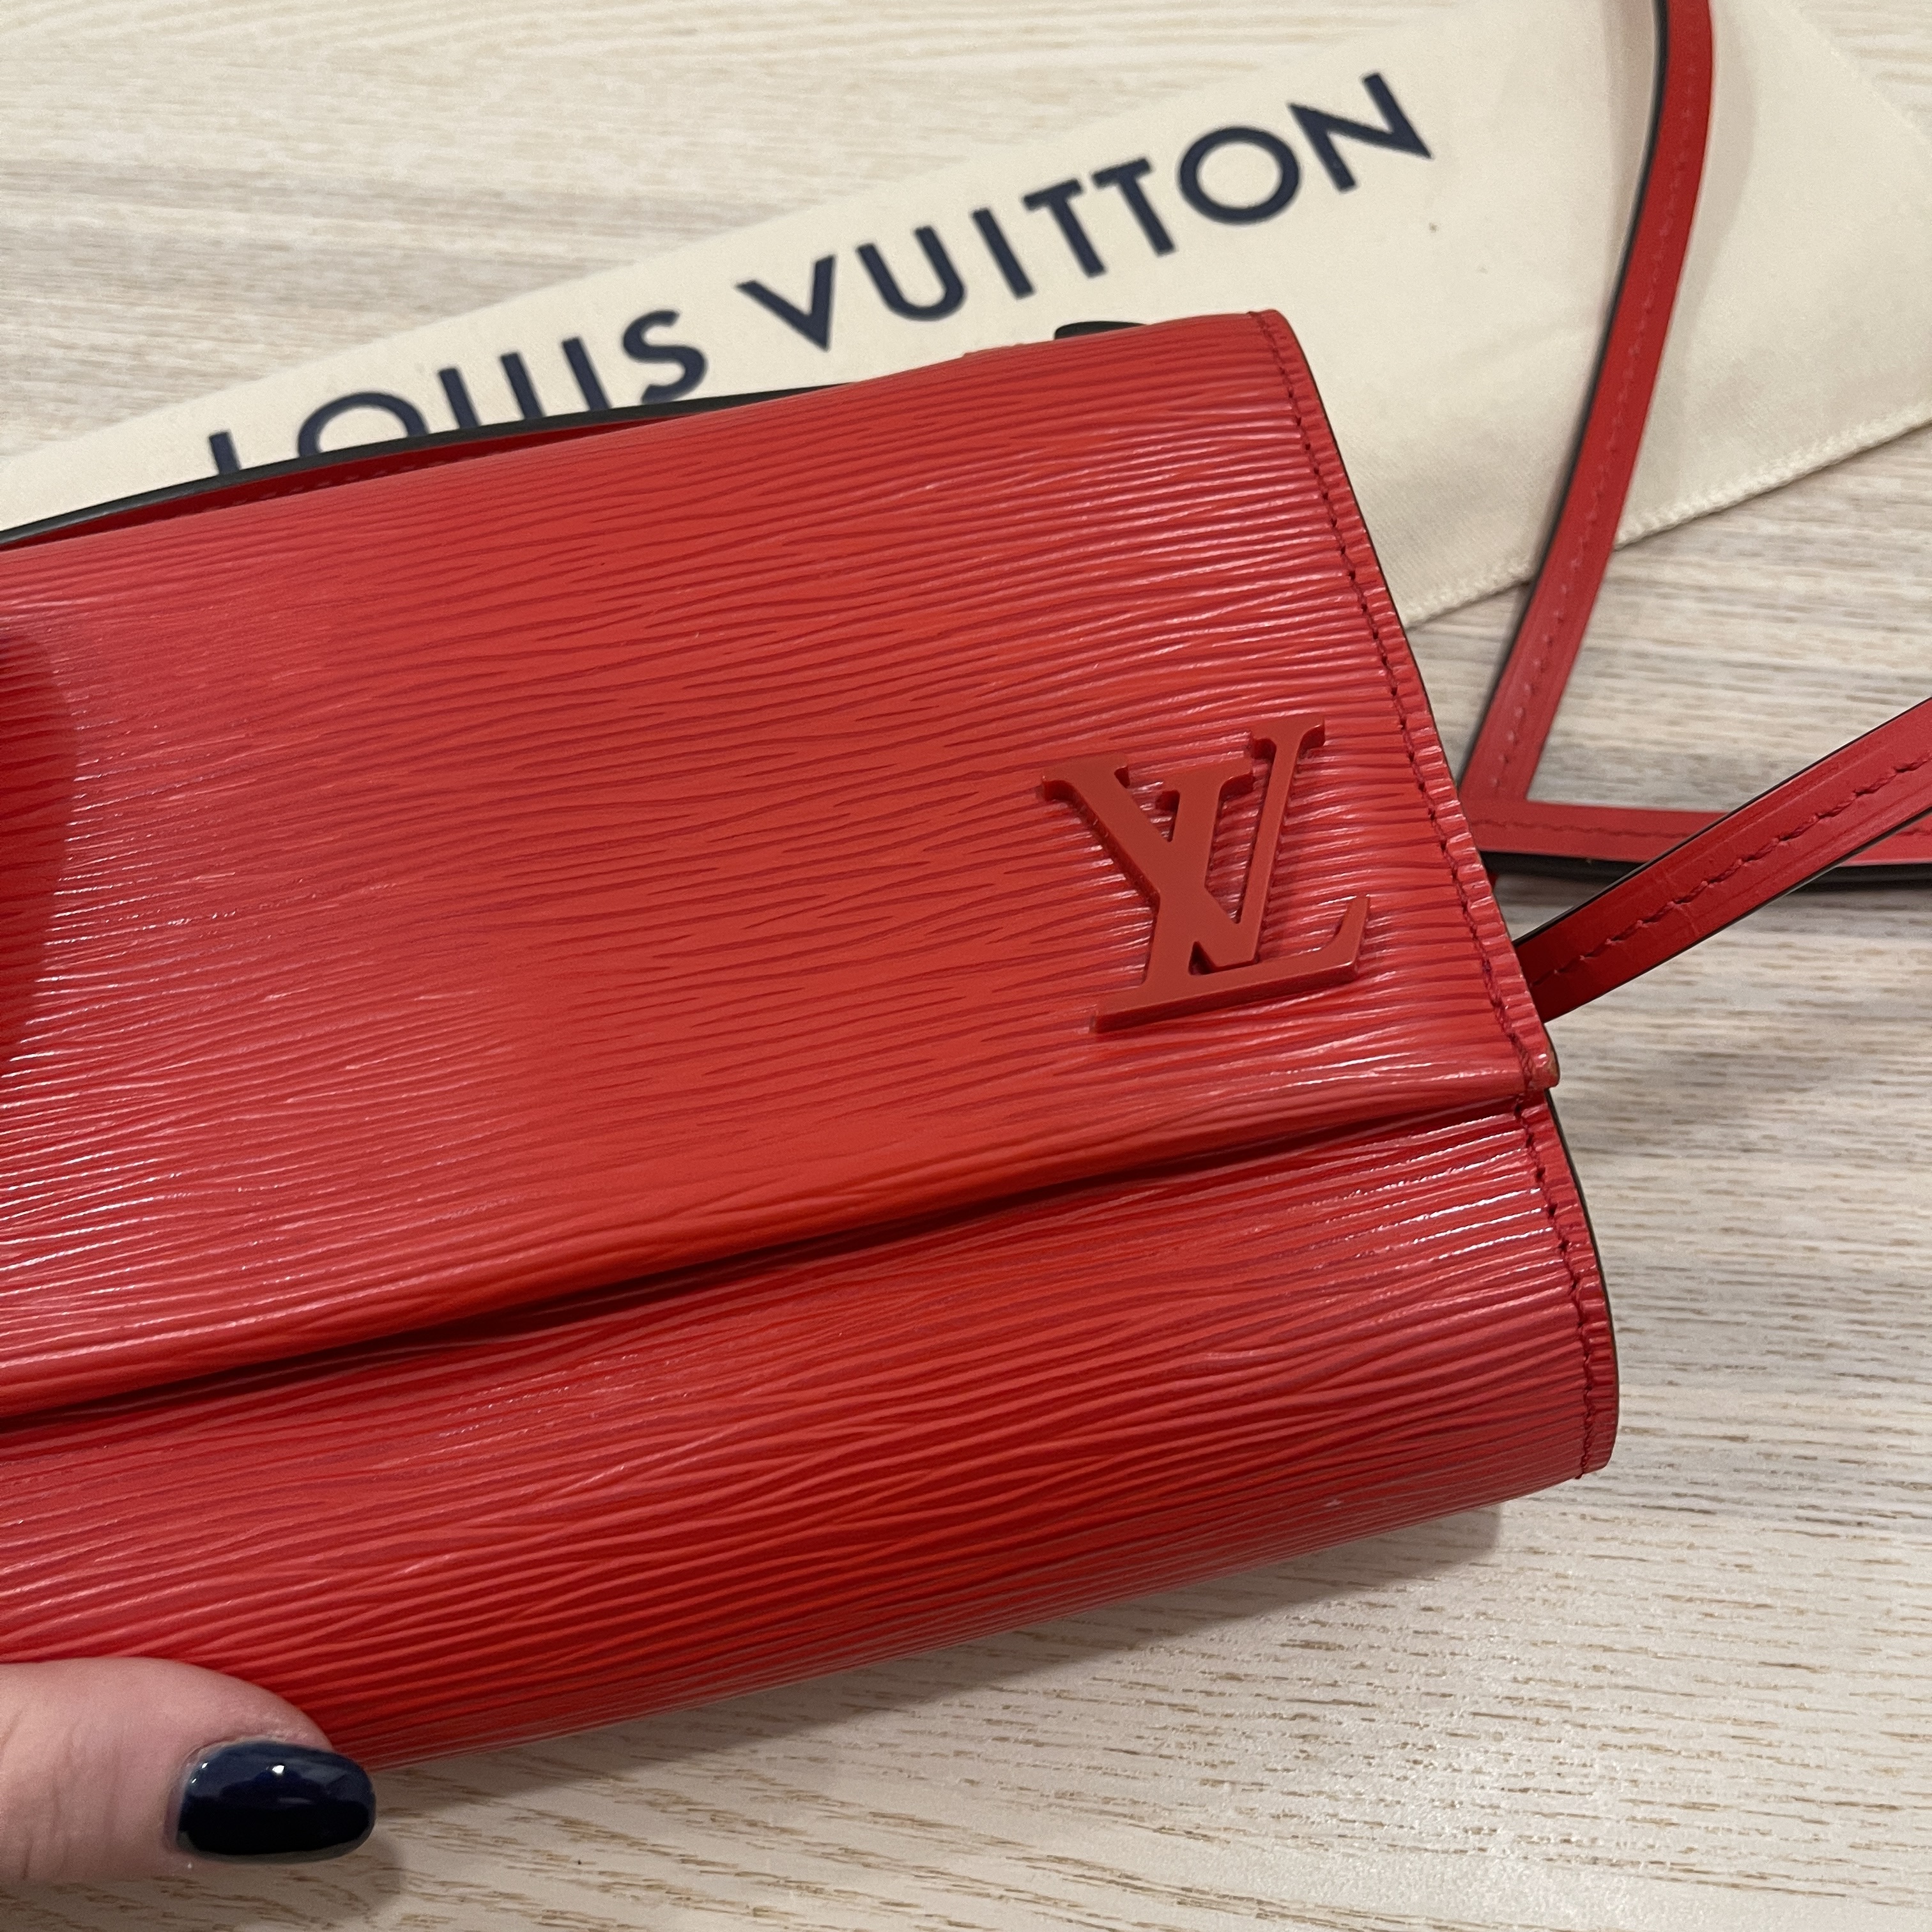 Louis Vuitton Epi Clery Coquelicot